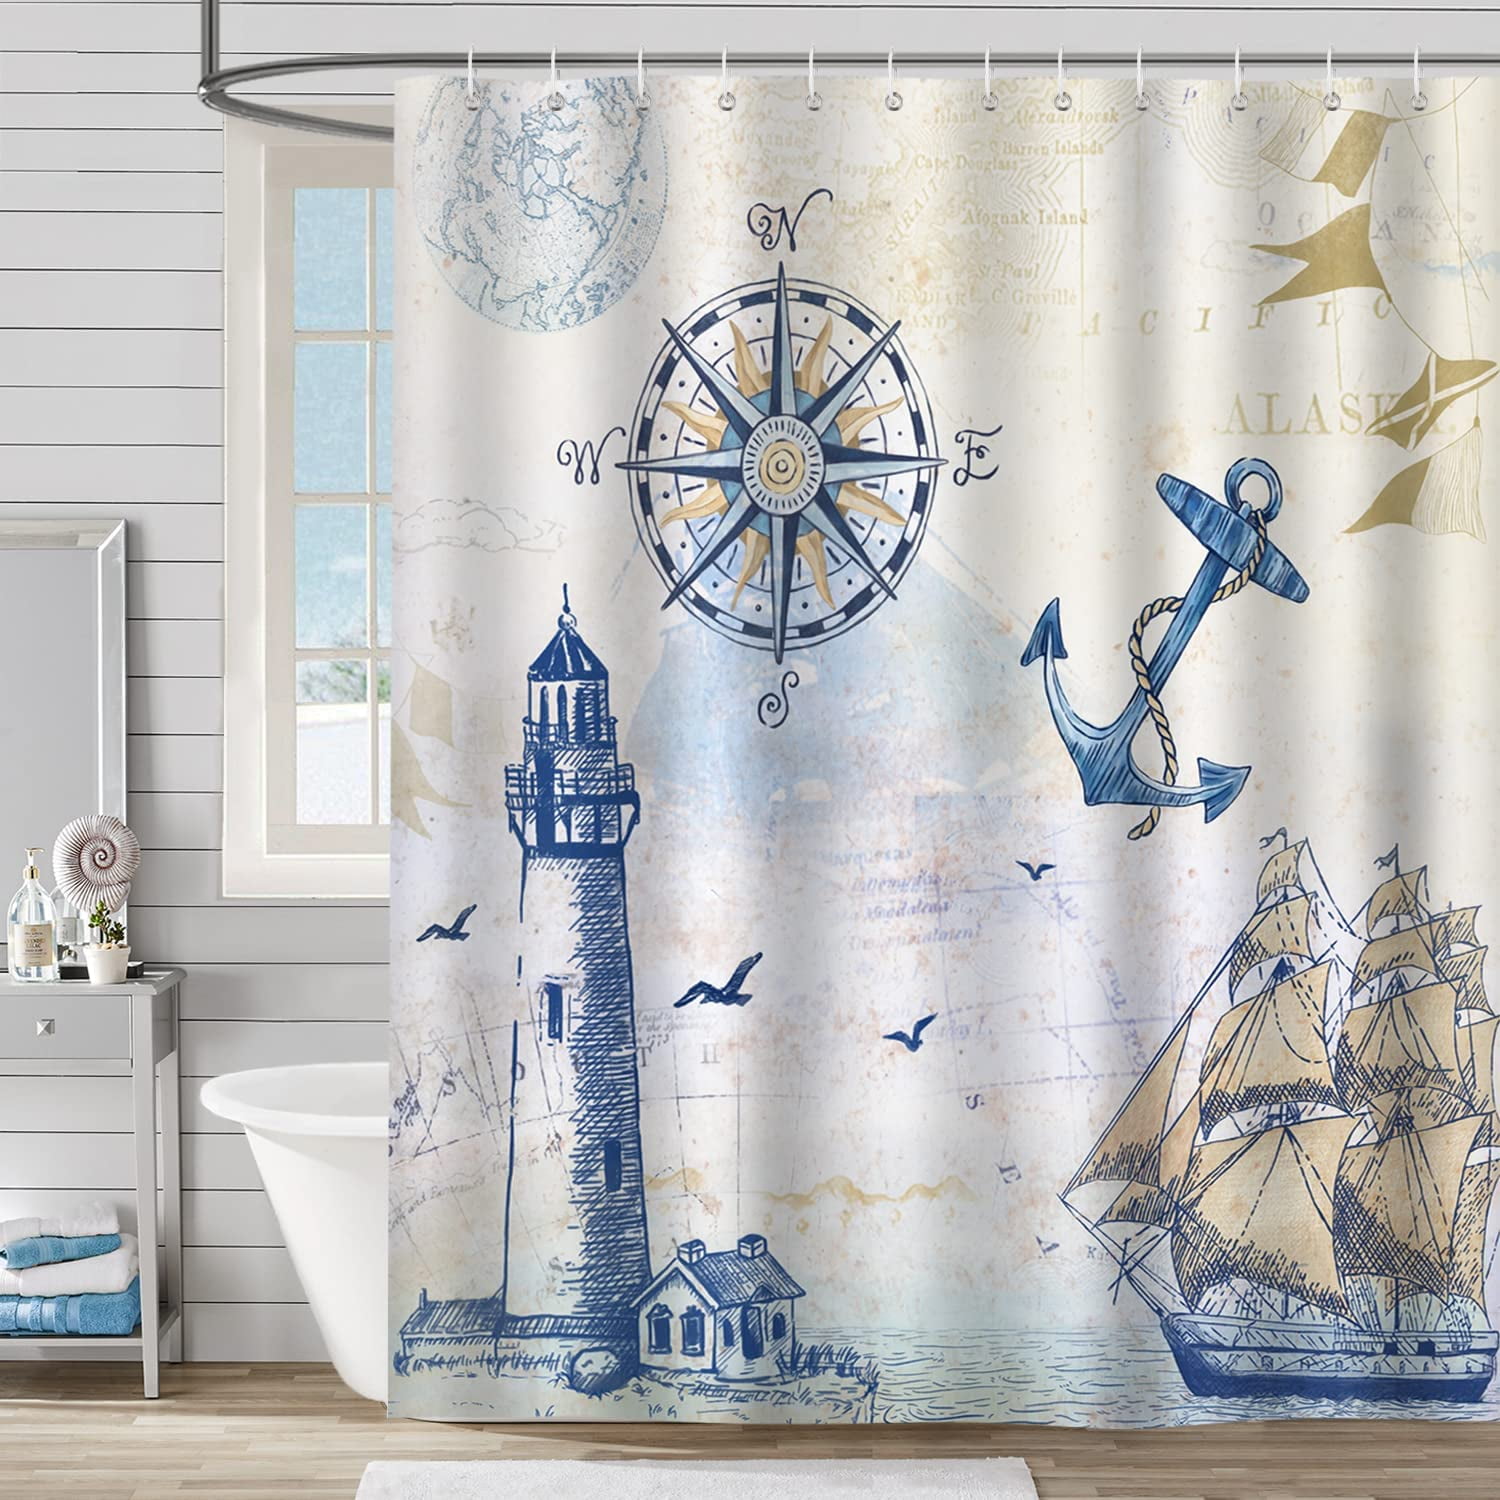 180*180cm 3D Windows beach Waterproof Fabric Shower Curtain Bathroom home decor 